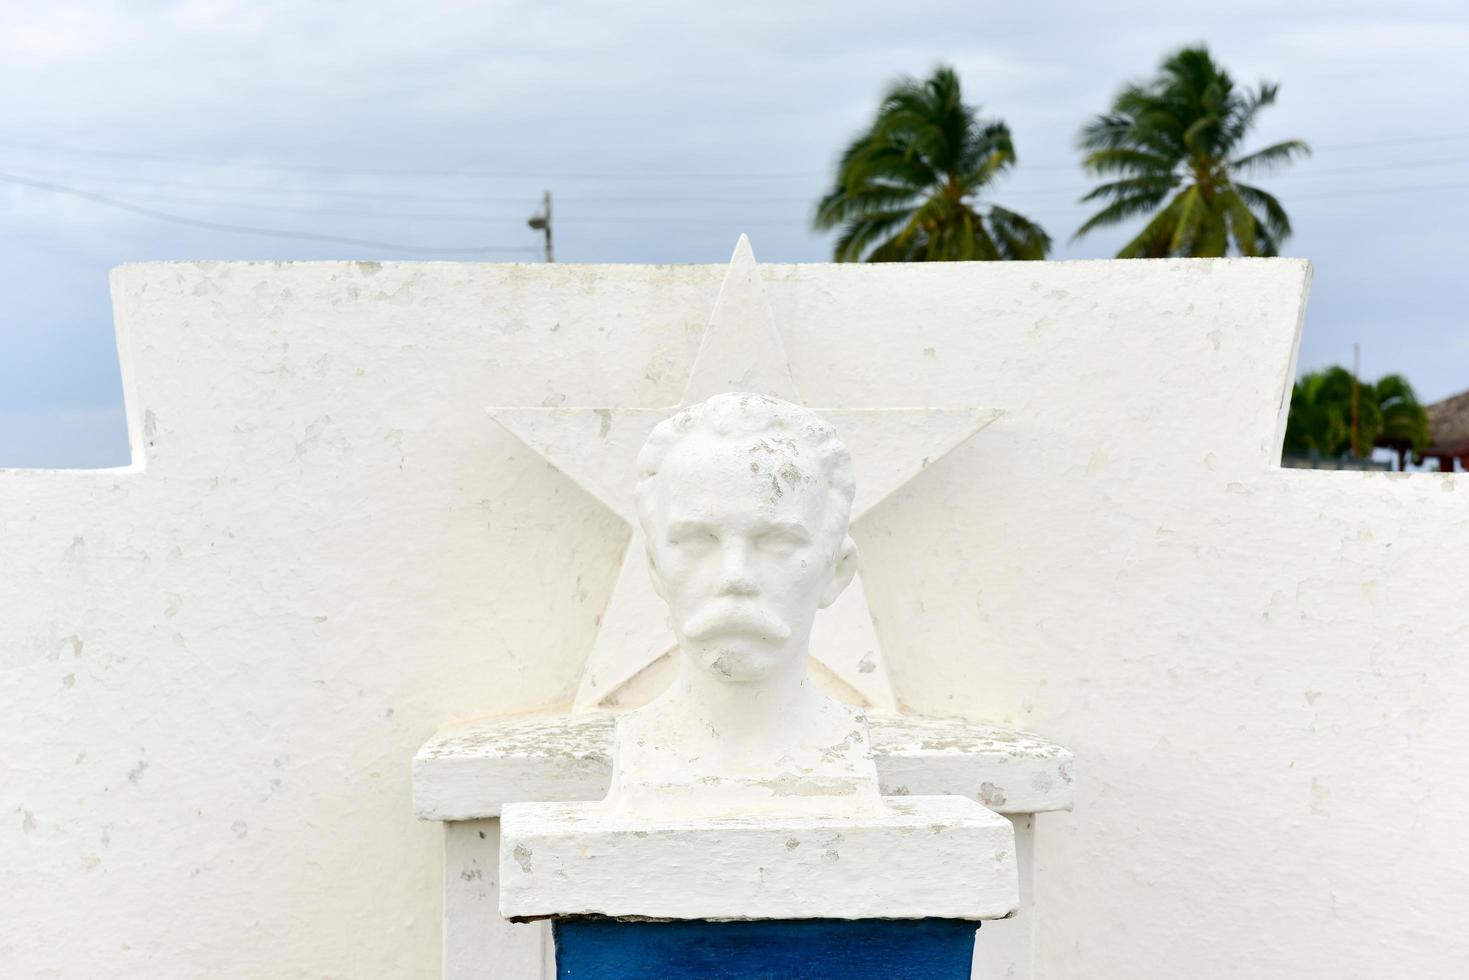 Monument to Jose de Marti in Puerto de Esperanza, Cuba, 2022 photo